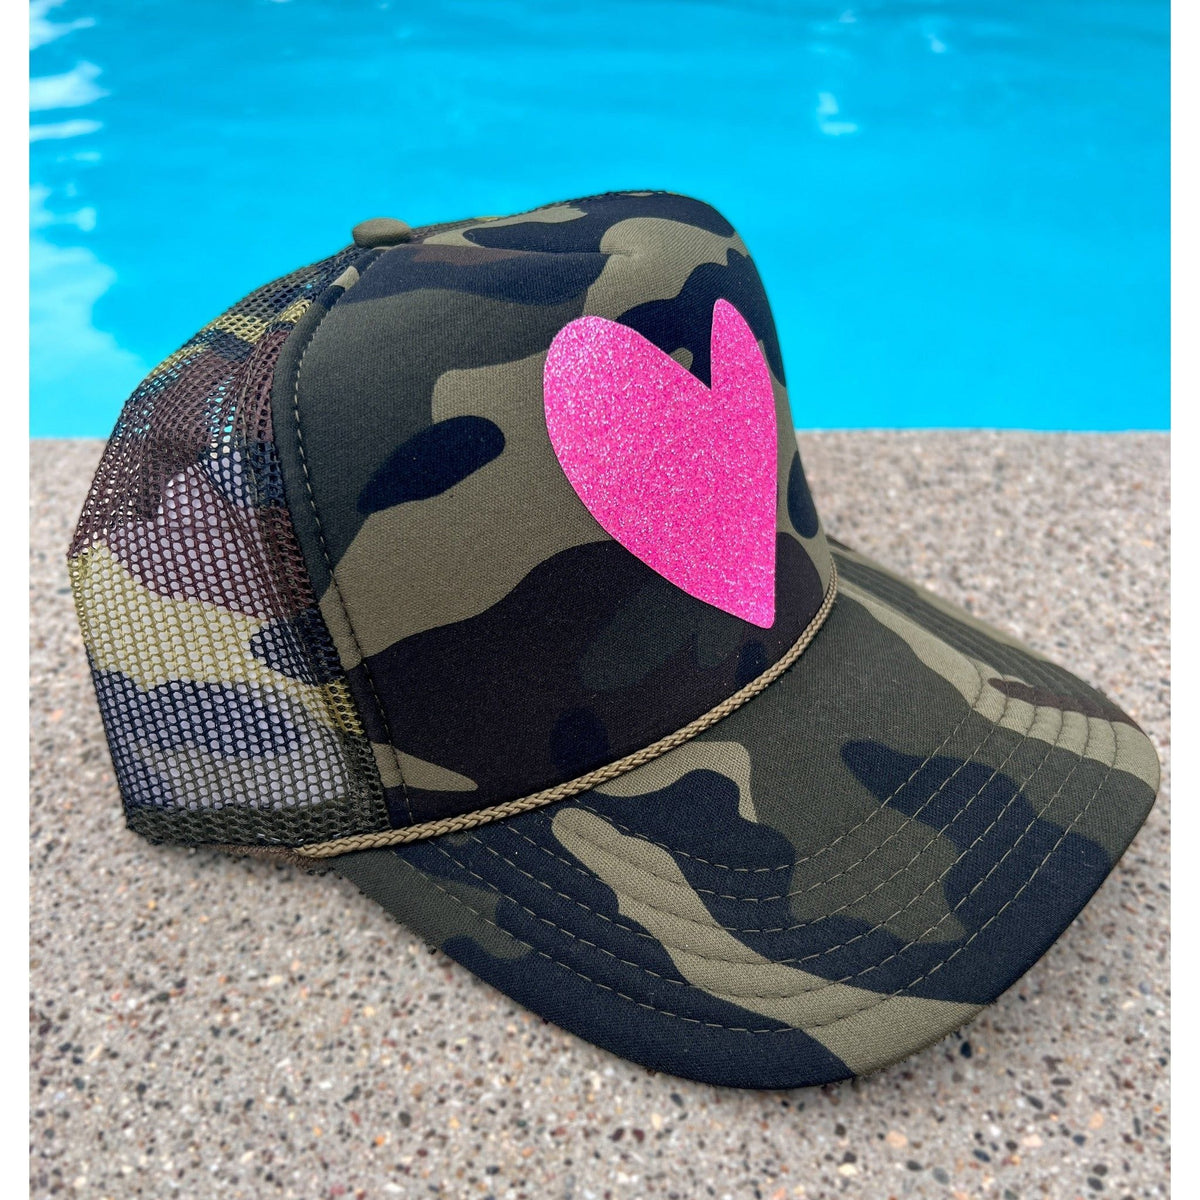 Camo Sparkle Heart - Trucker Hat by Haute Sheet Hats TheFringeCultureCollective